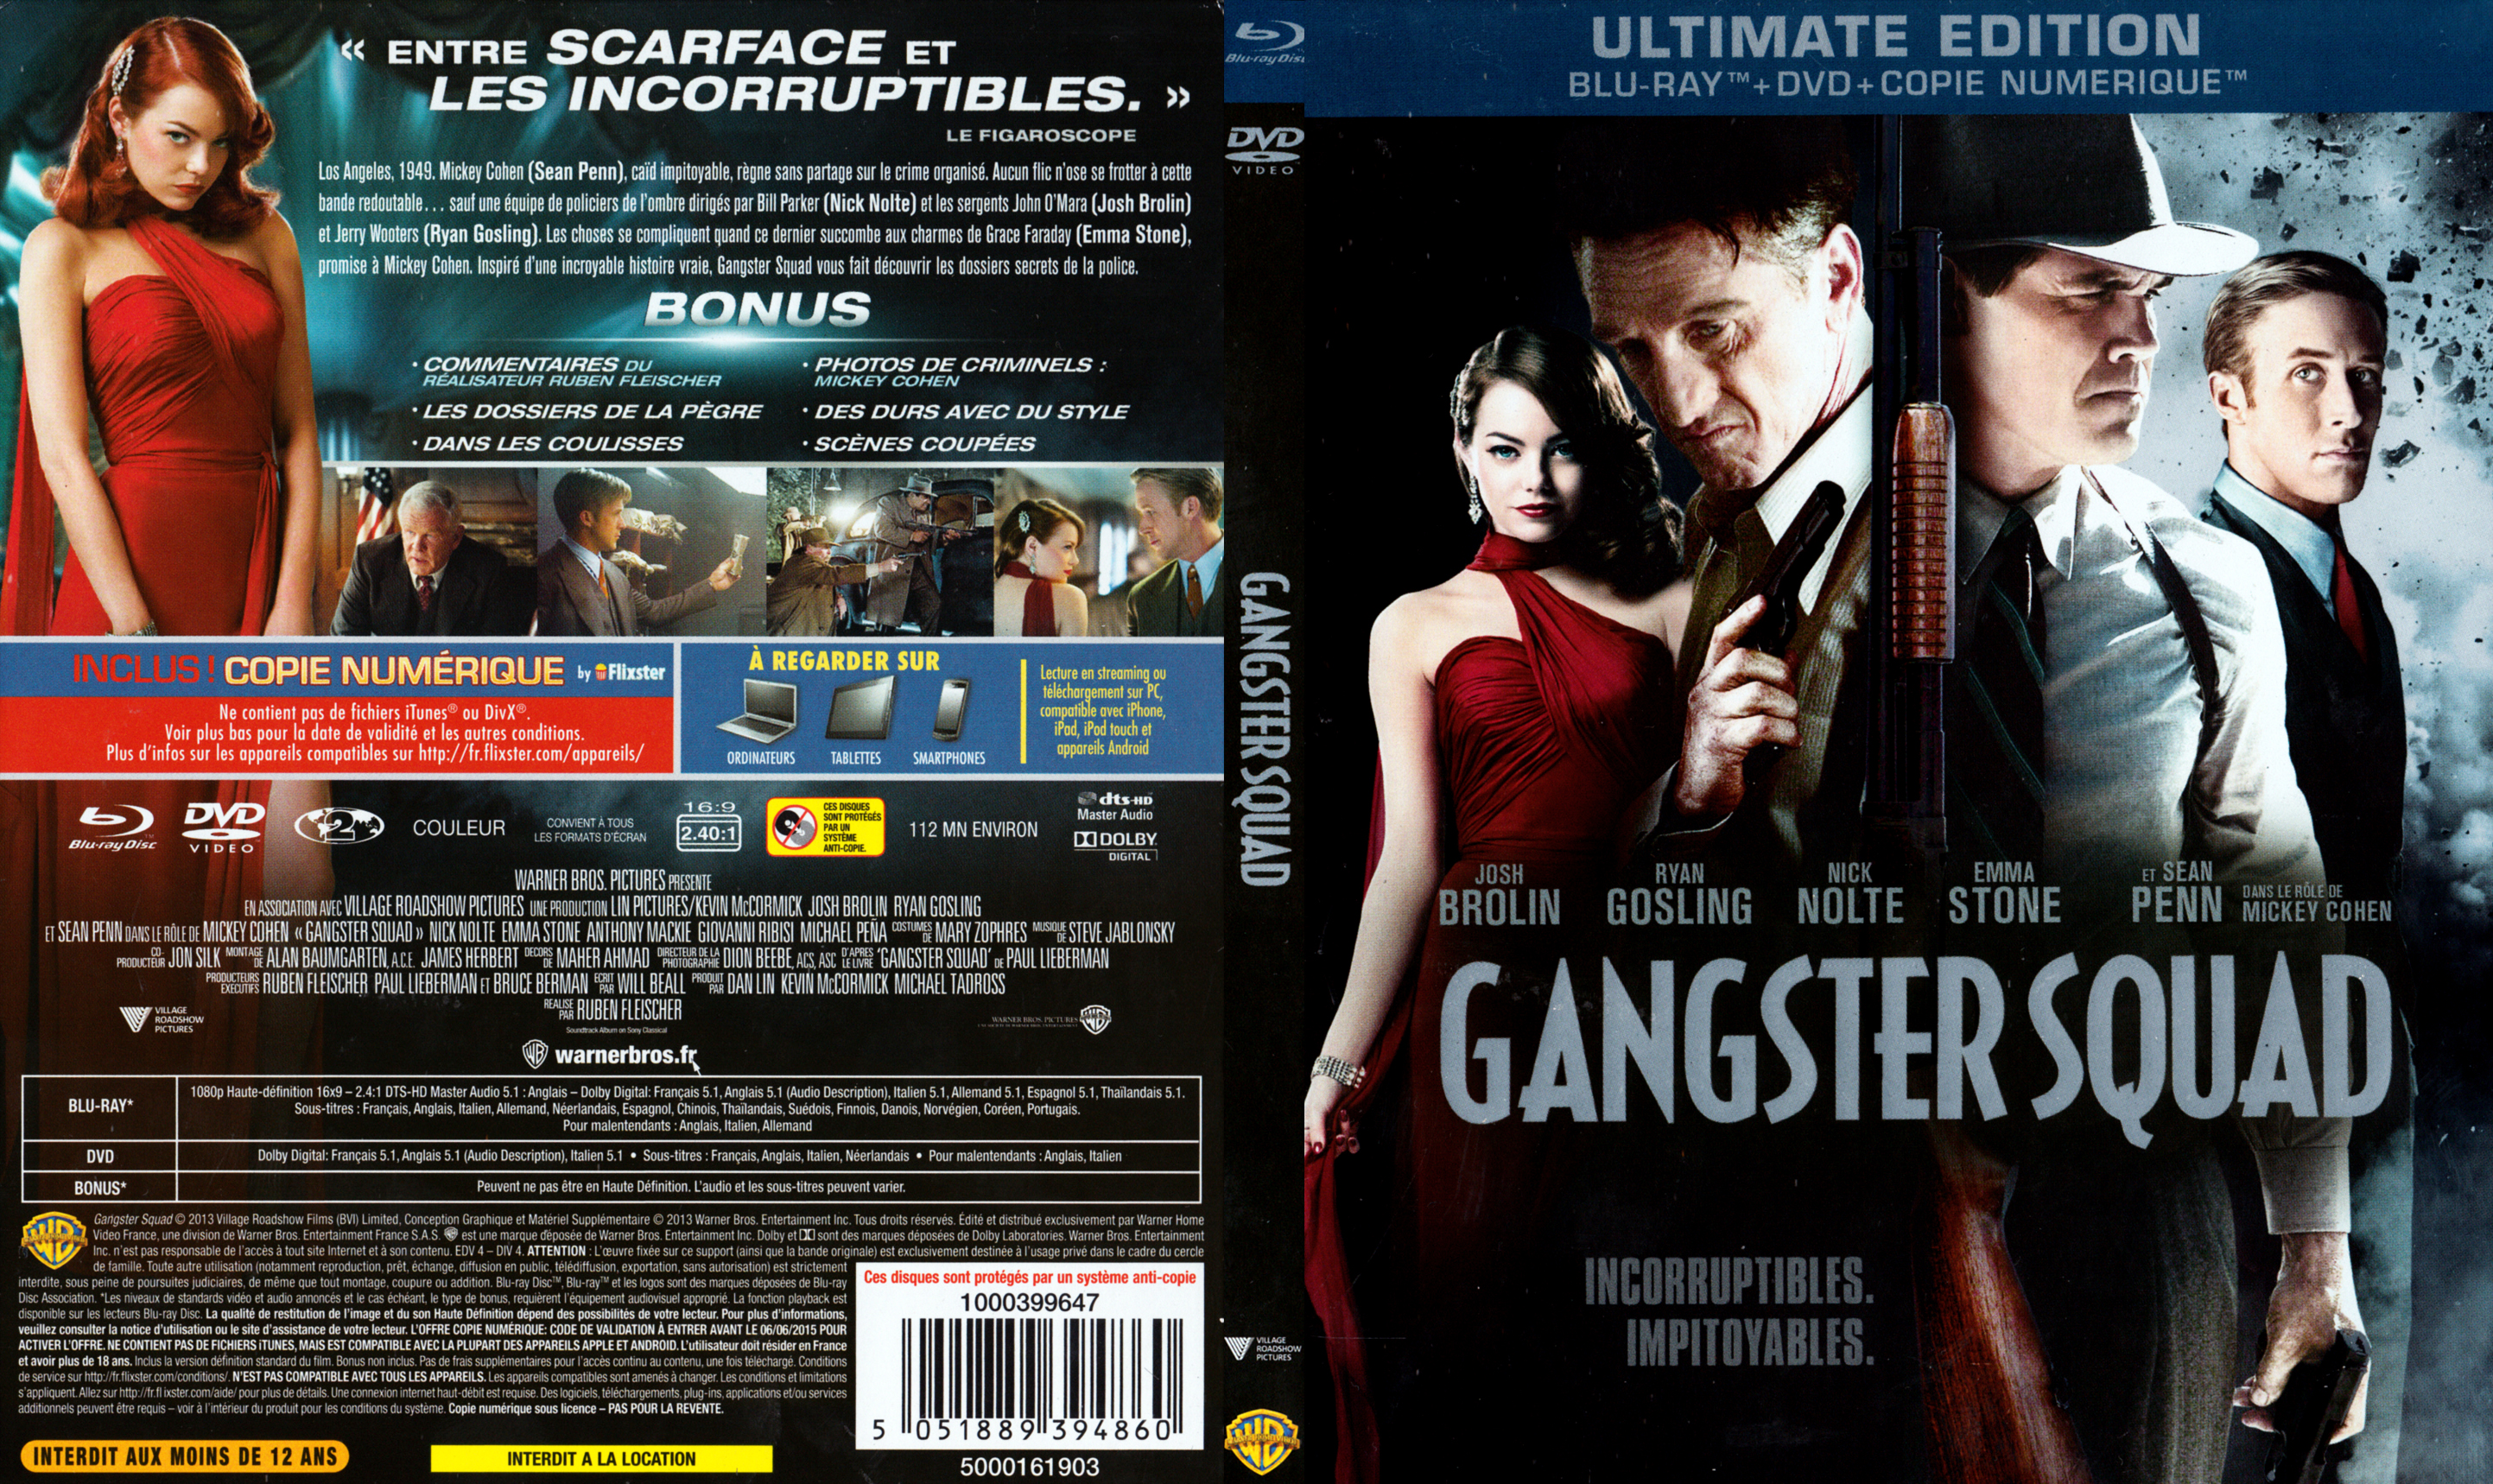 Jaquette DVD Gangster squad (BLU-RAY) v2